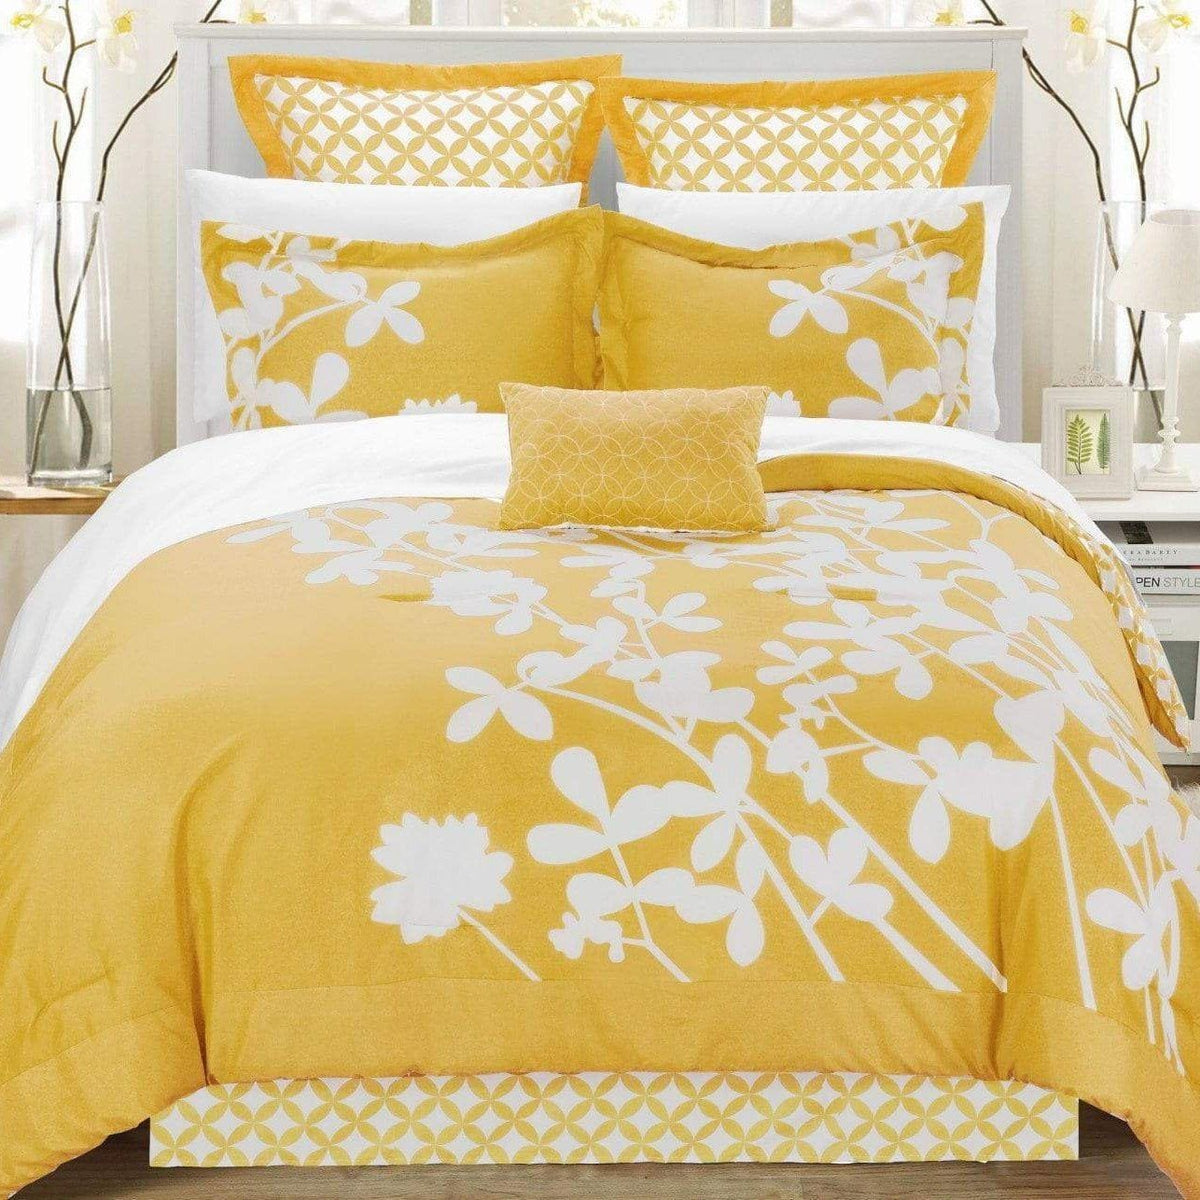 Chic Home Iris 7 Piece Floral Comforter Set Yellow